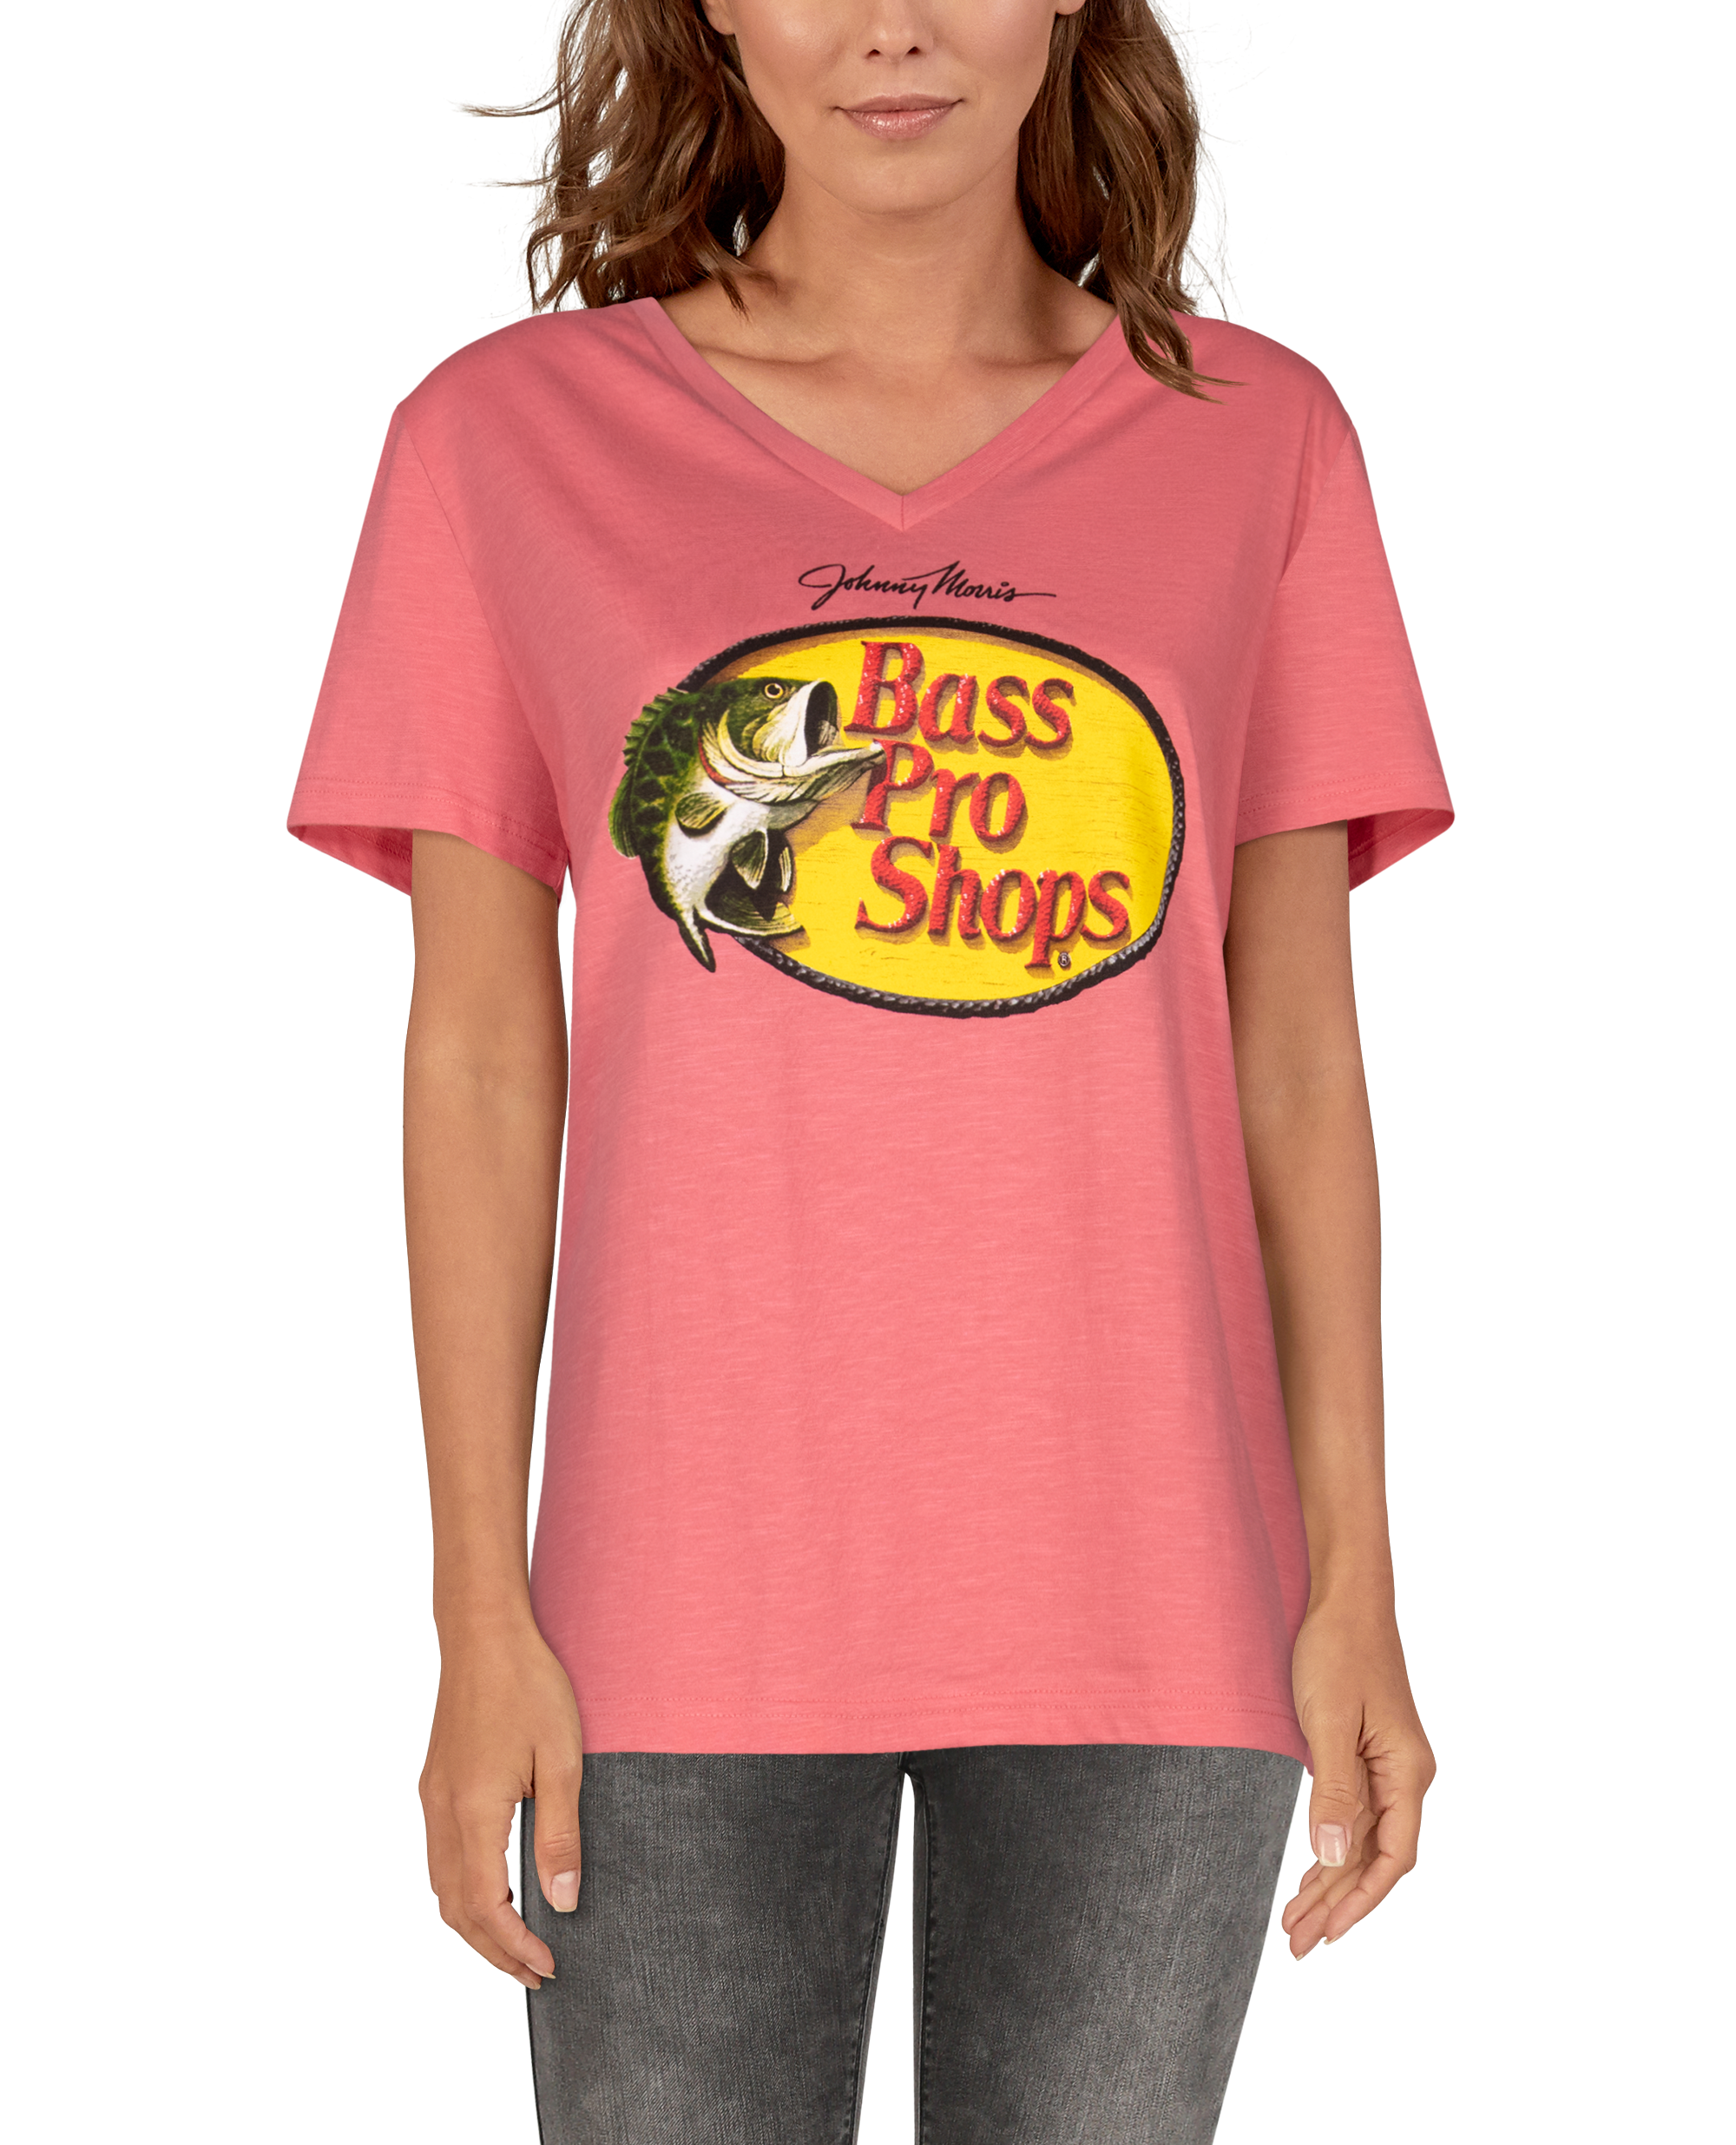 Bass Pro Shops Woodcut Logo V-Neck Short-Sleeve T-Shirt for Ladies - Pink - S